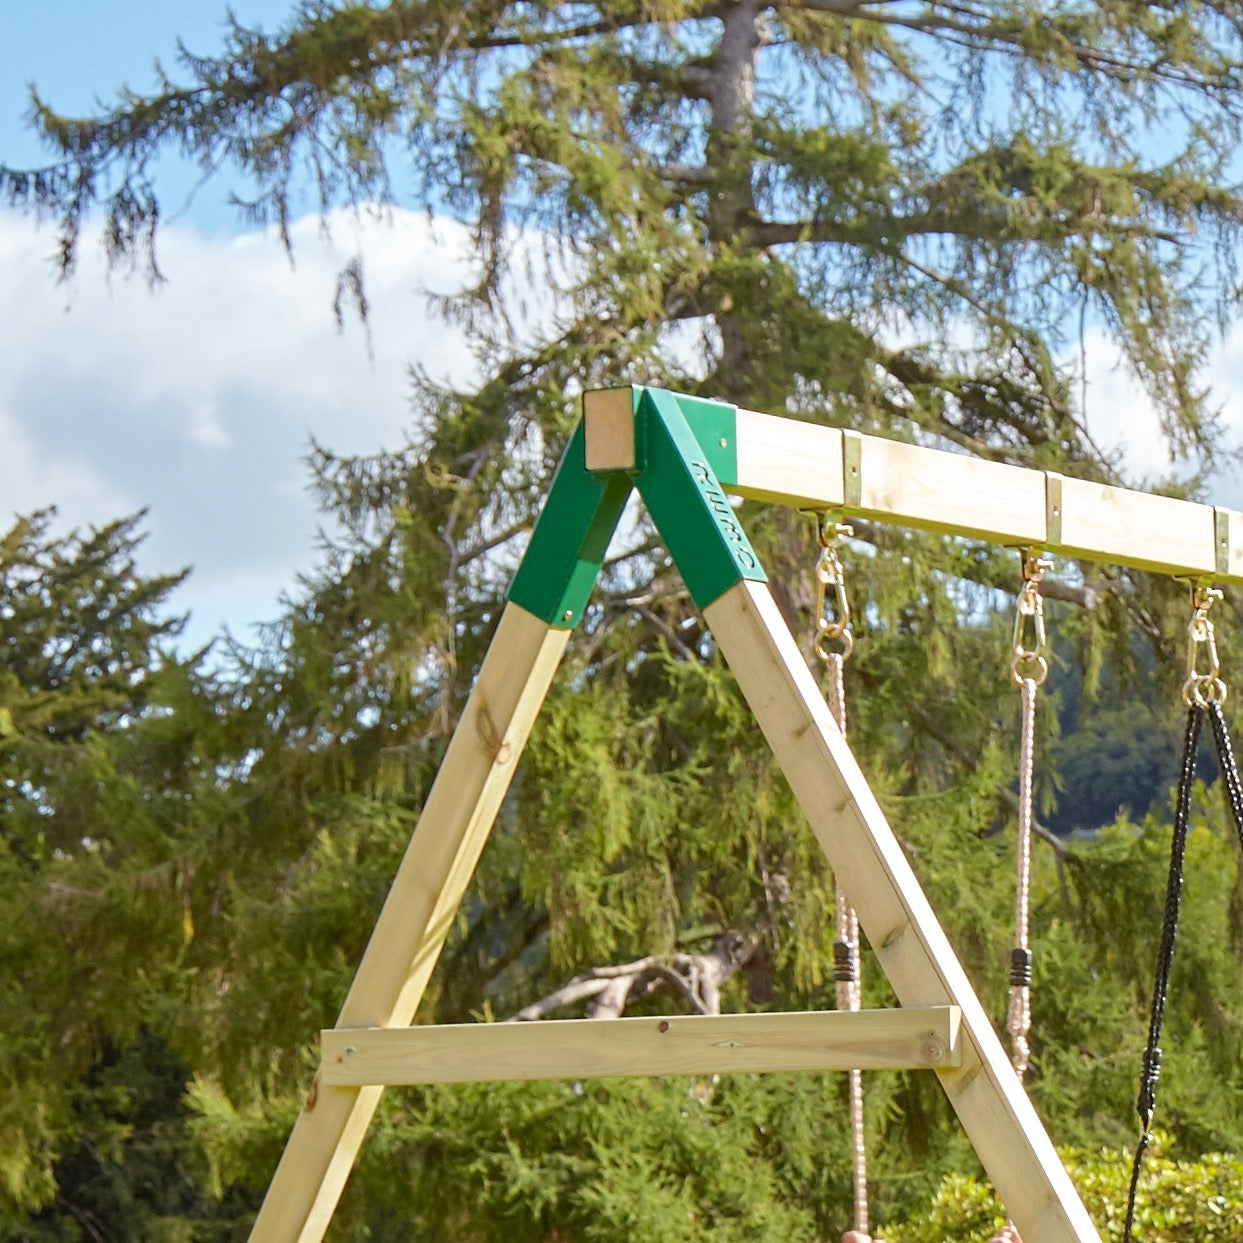 Rebo Adventure Wooden Climbing Frame, Swing Set and Slide - Rainier Green